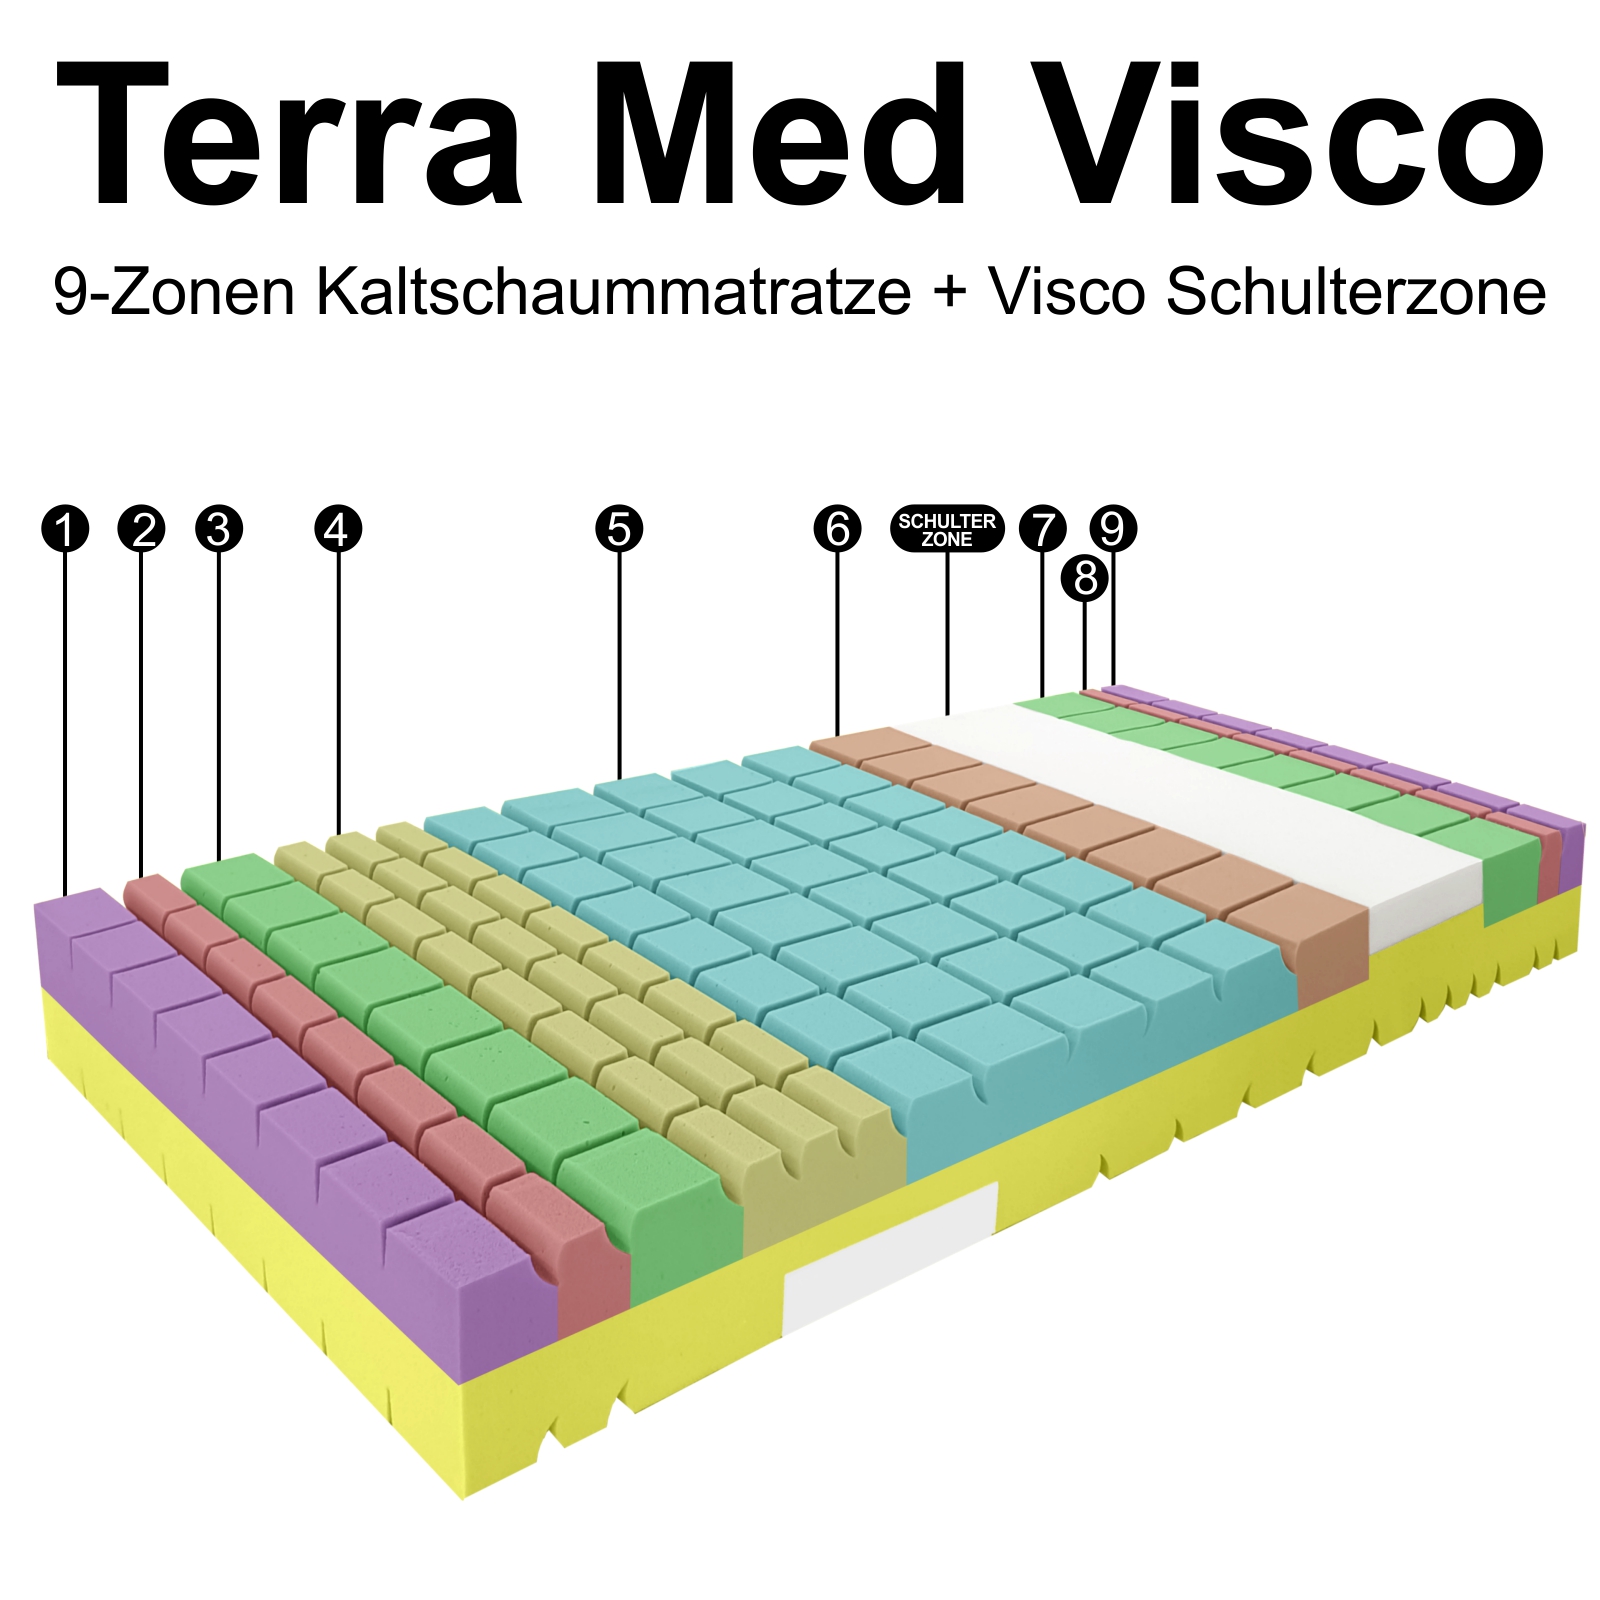 Kaltschaummatratze Terra Med Visco, Produktbild, farbige Zonendarstellung